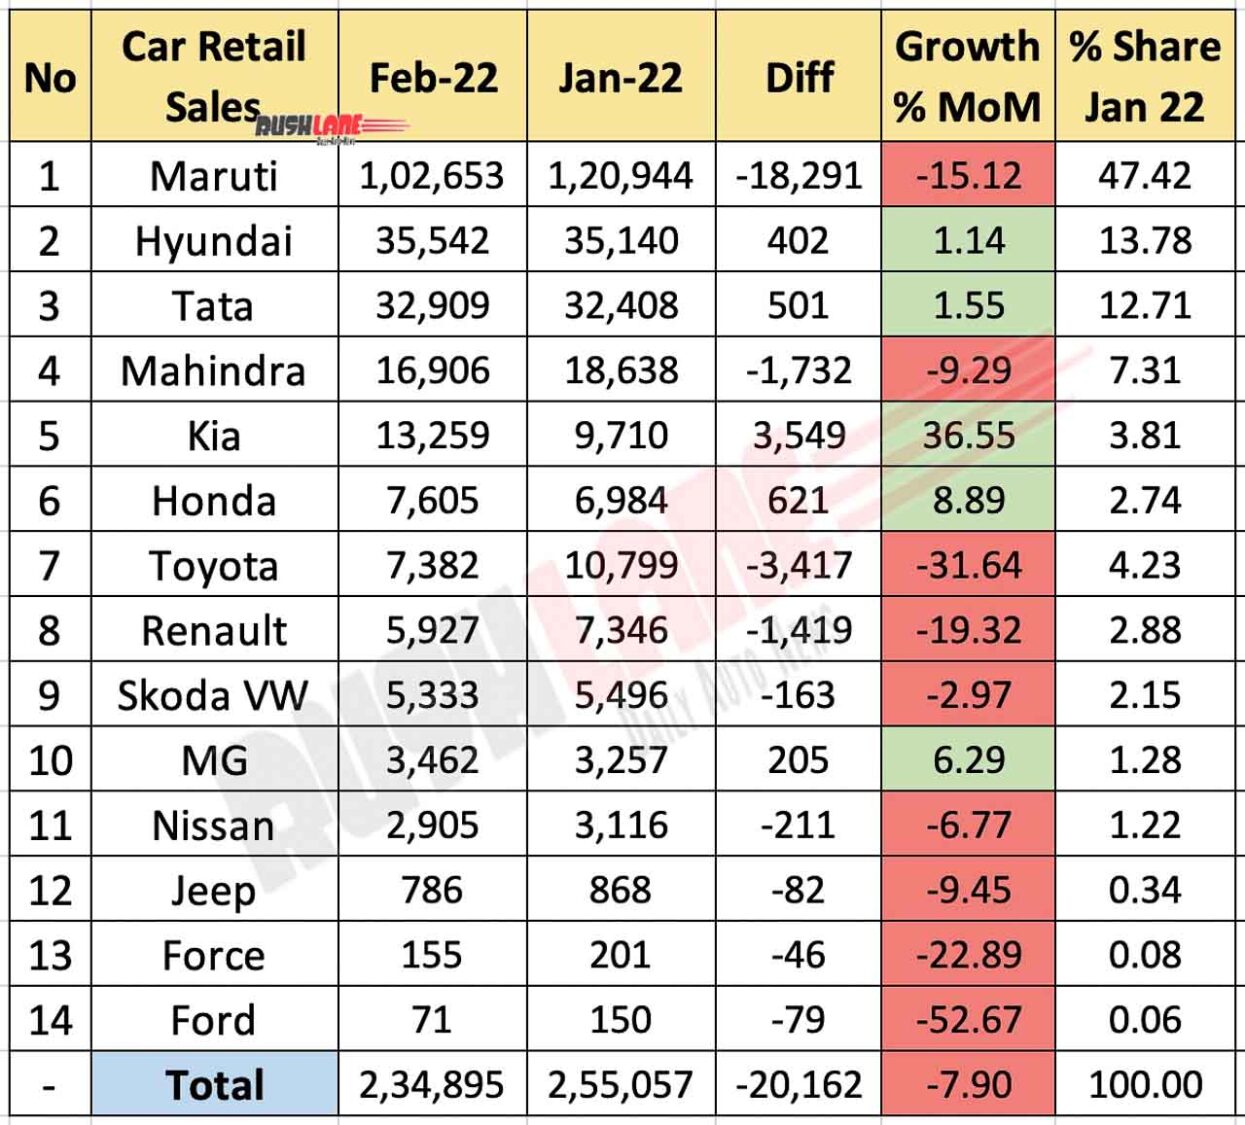 Car Retail Sales Feb 2022 vs Jan 2022 (MoM)